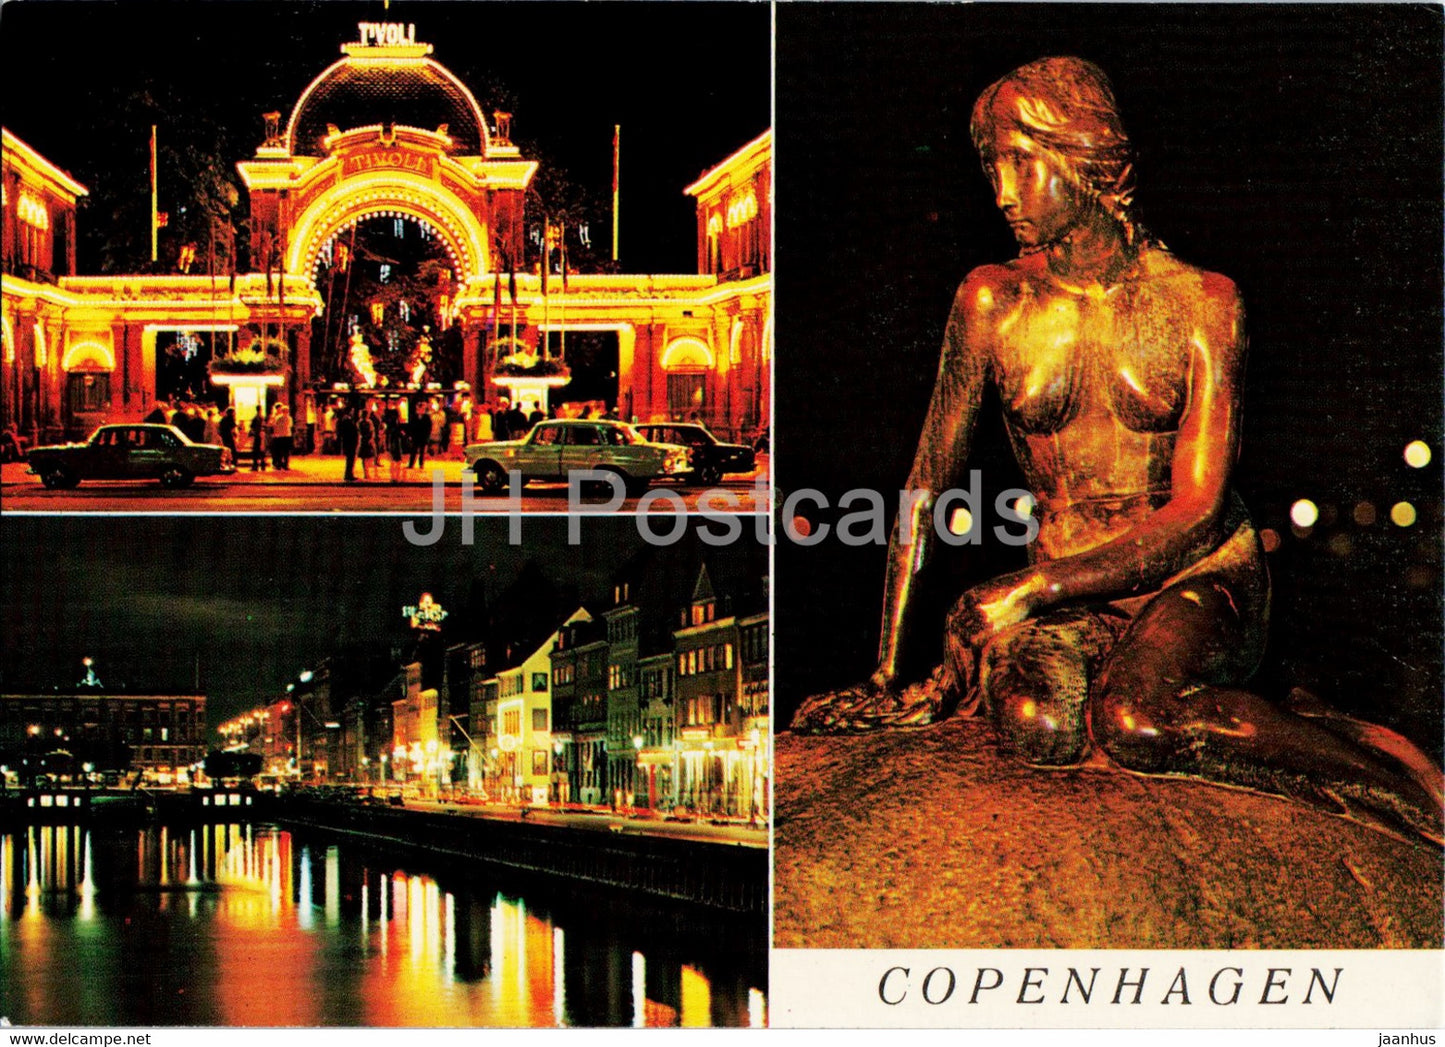 Copenhagen - The Entrance to Tivoli by Night - Little Mermaid - Denmark - unused - JH Postcards